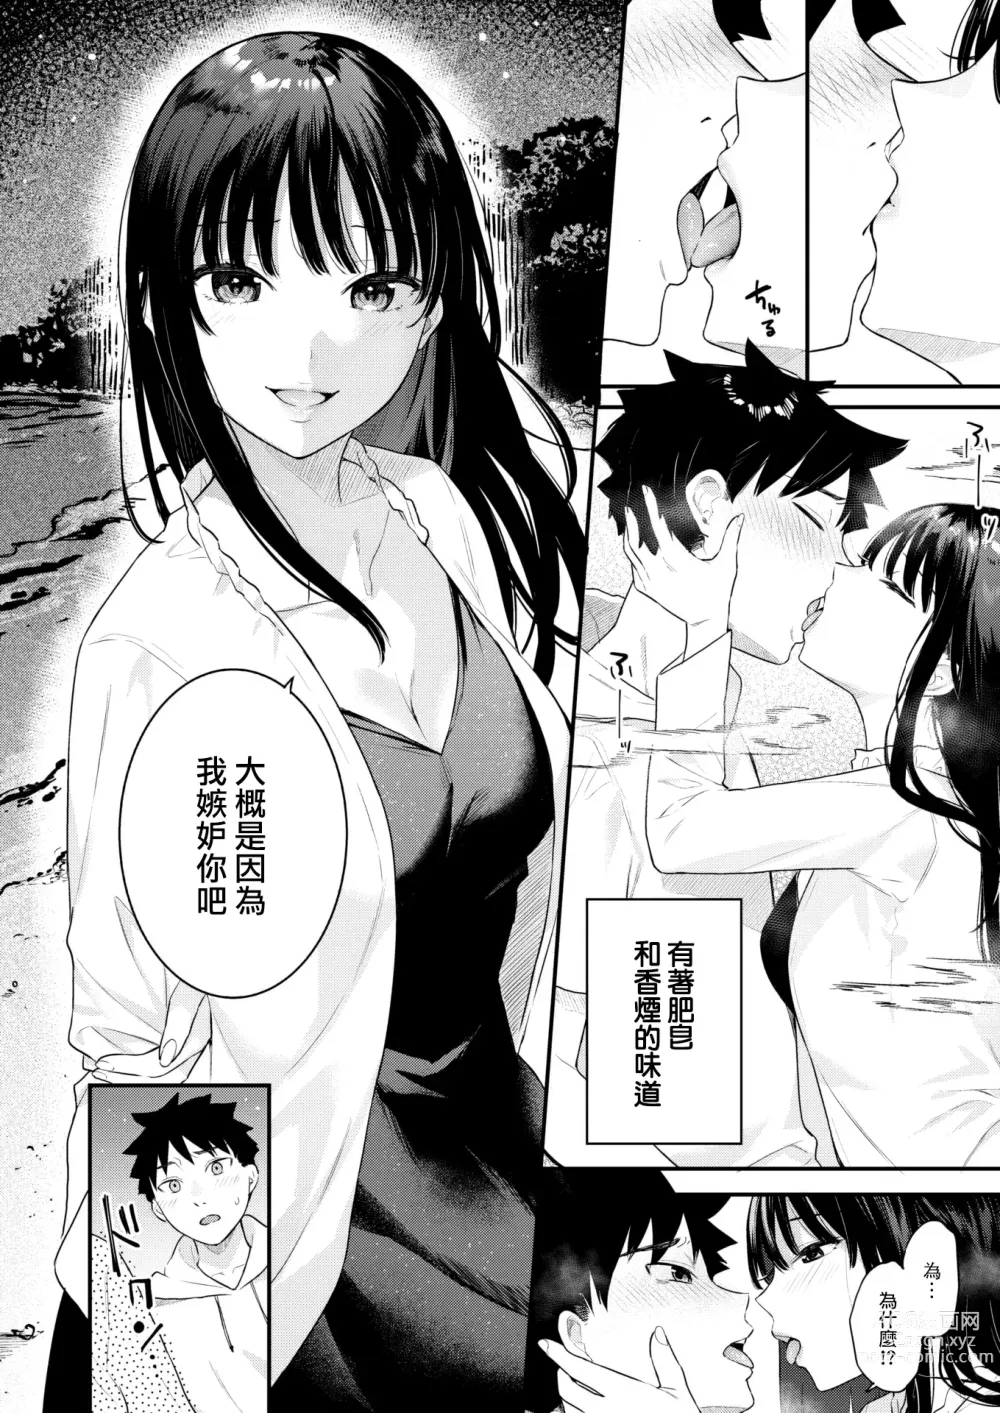 Page 11 of manga Anohi no kagero